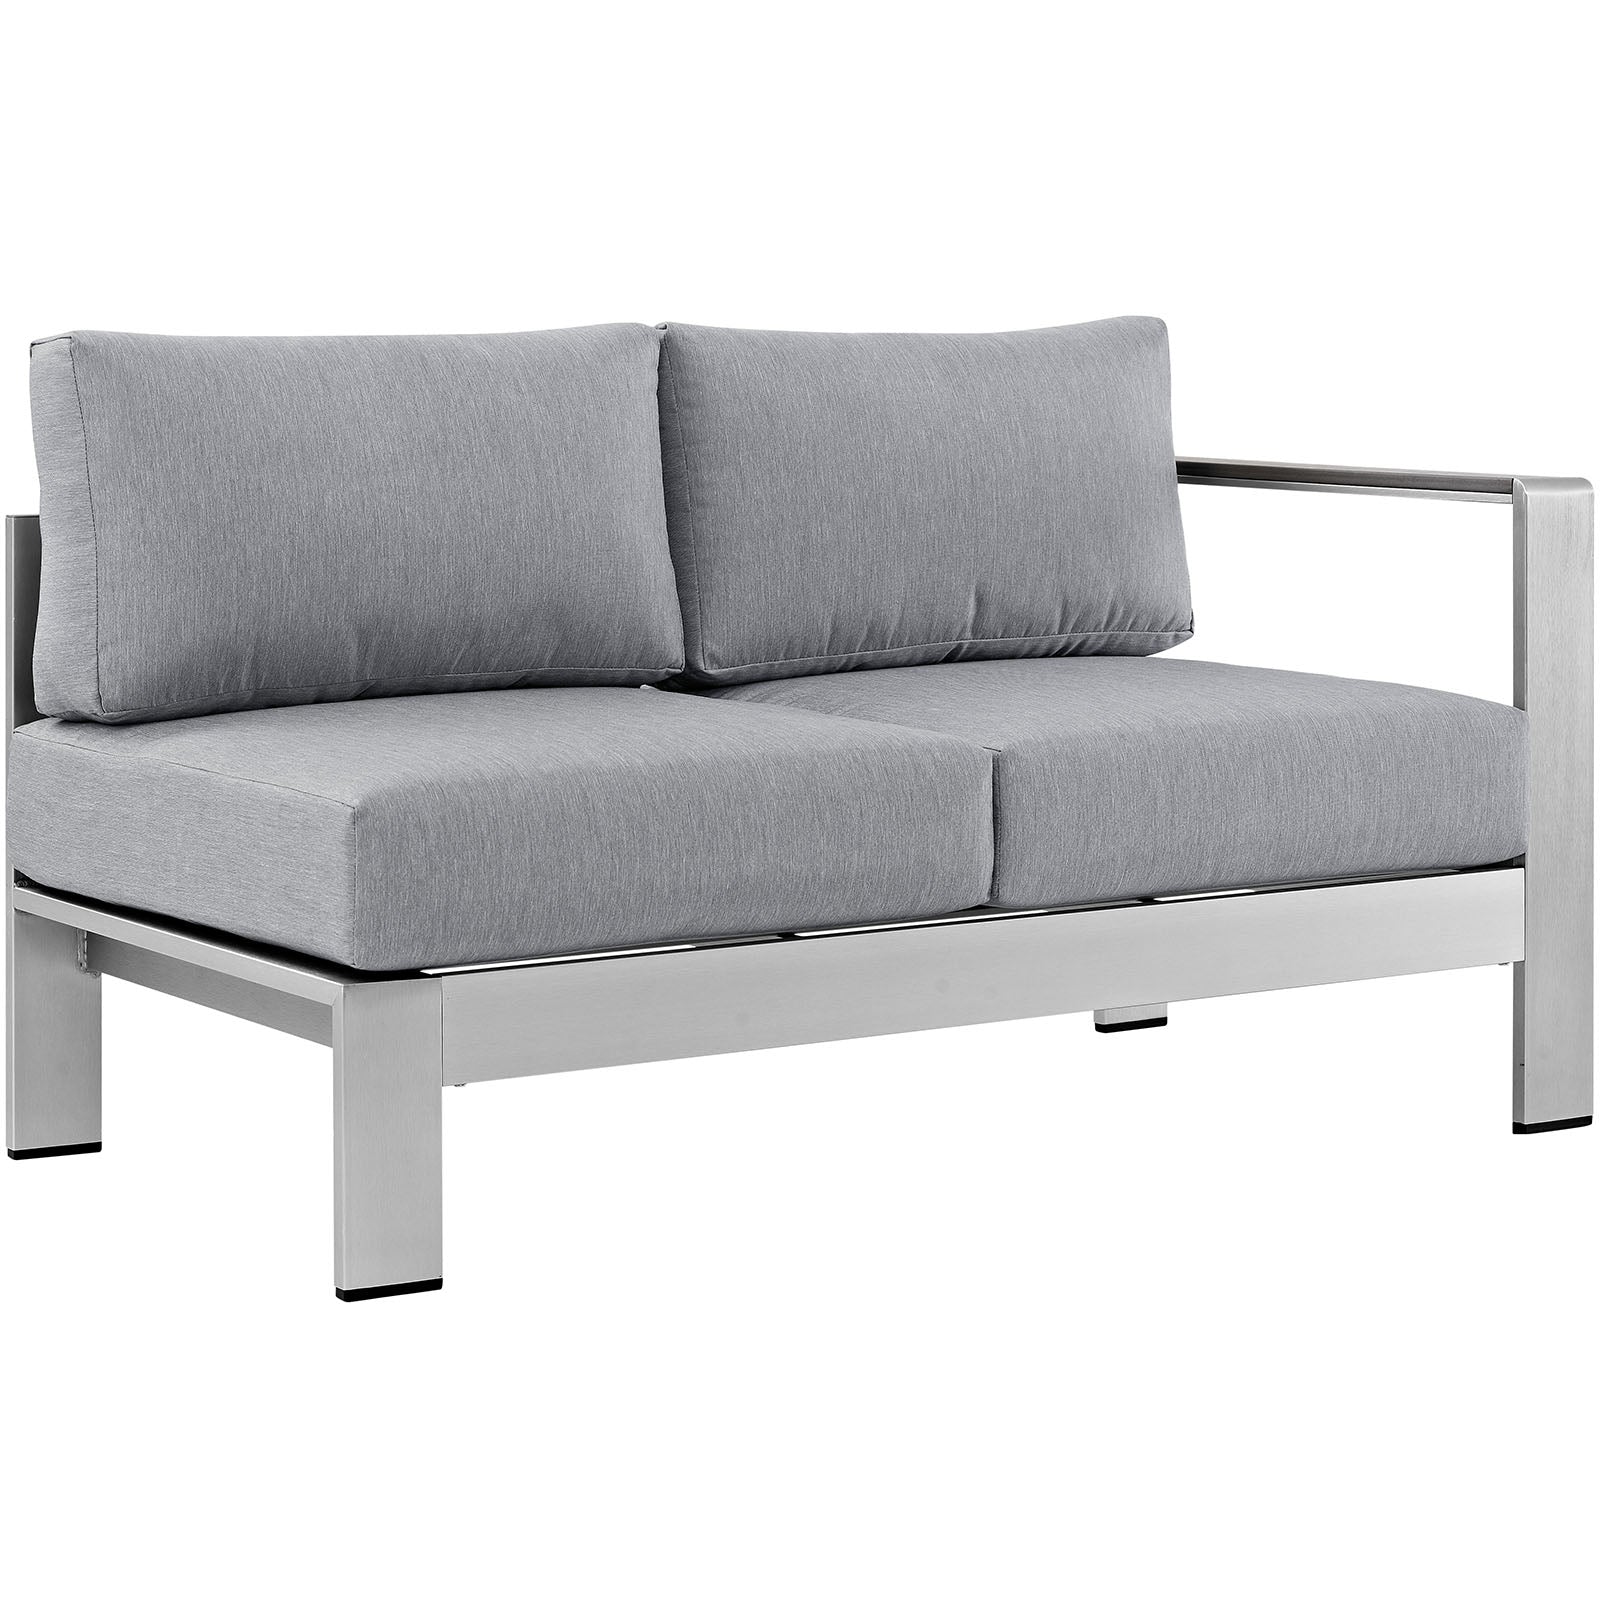 Shore 5 Piece Outdoor Patio Aluminum Sectional Sofa Set